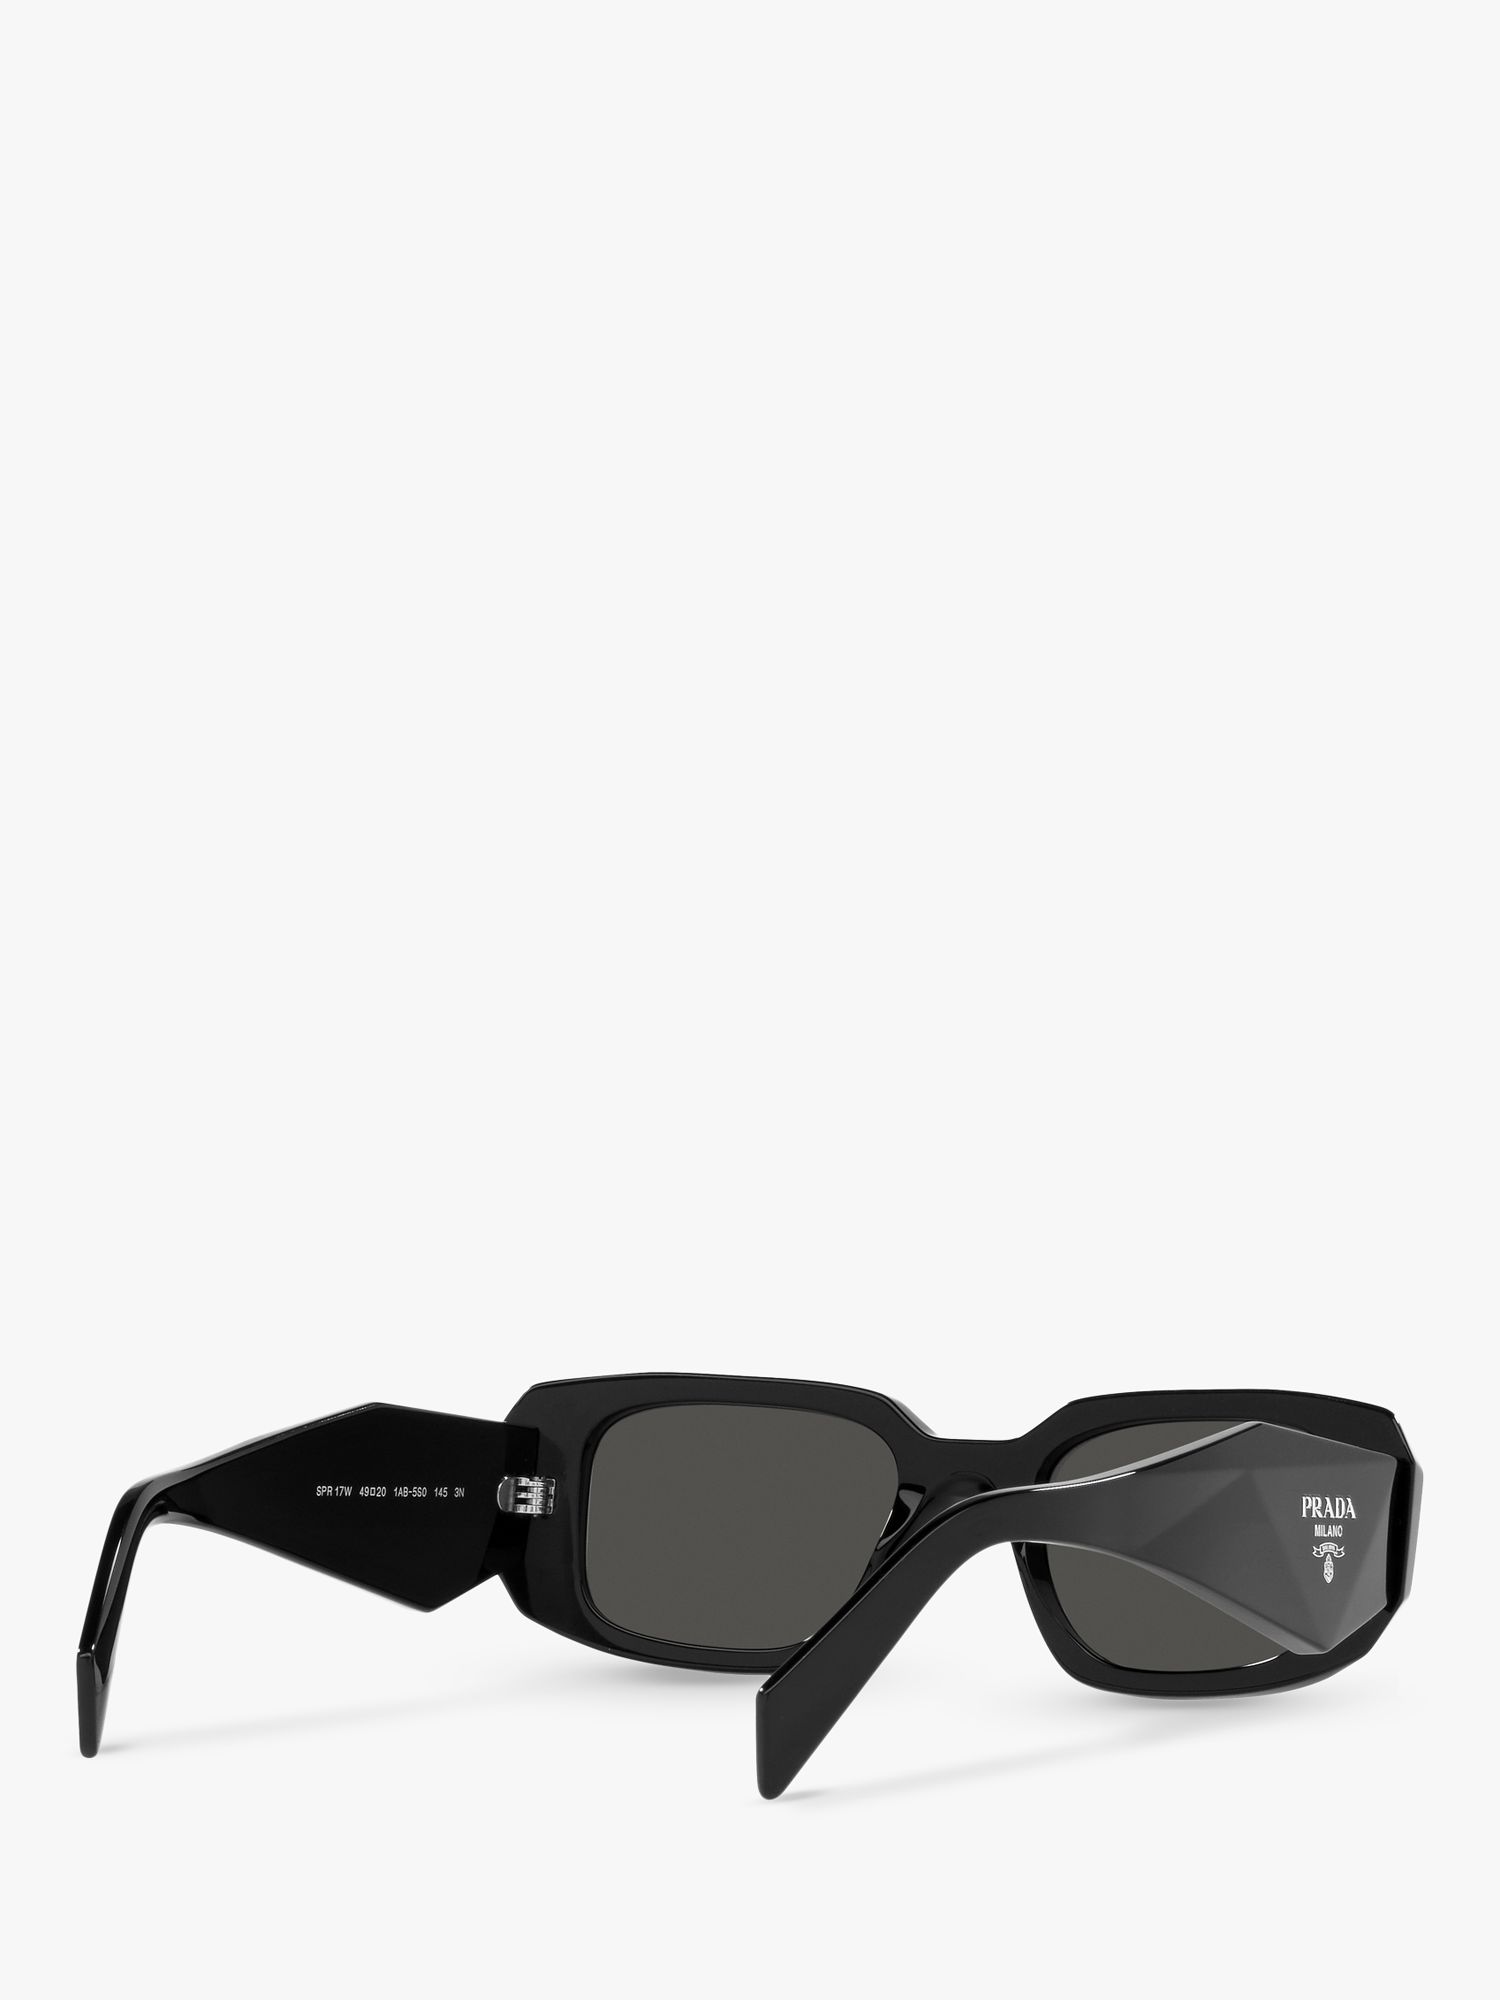 Prada PR 17WS Women's Square Sunglasses, Black